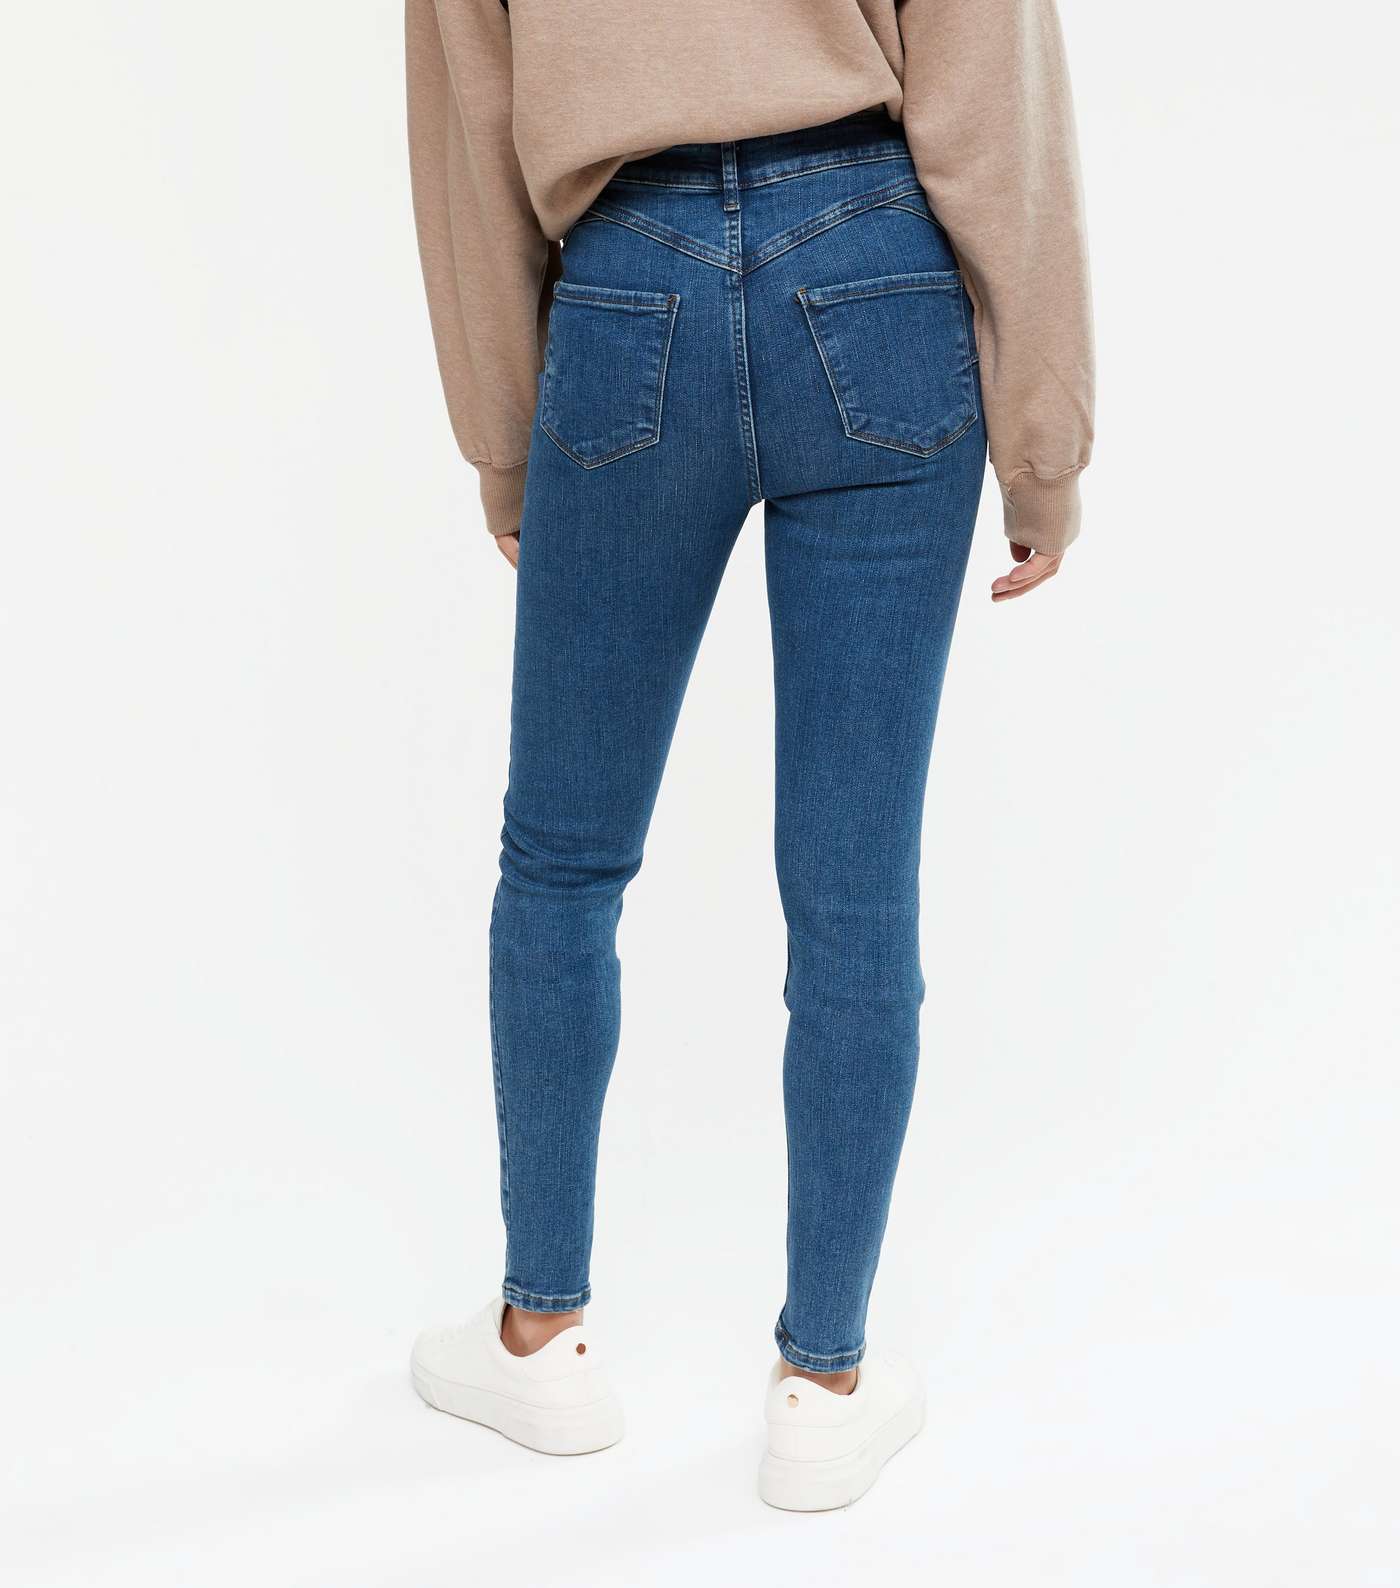 Blue 'Lift & Shape' Jenna Skinny Jeans Image 3